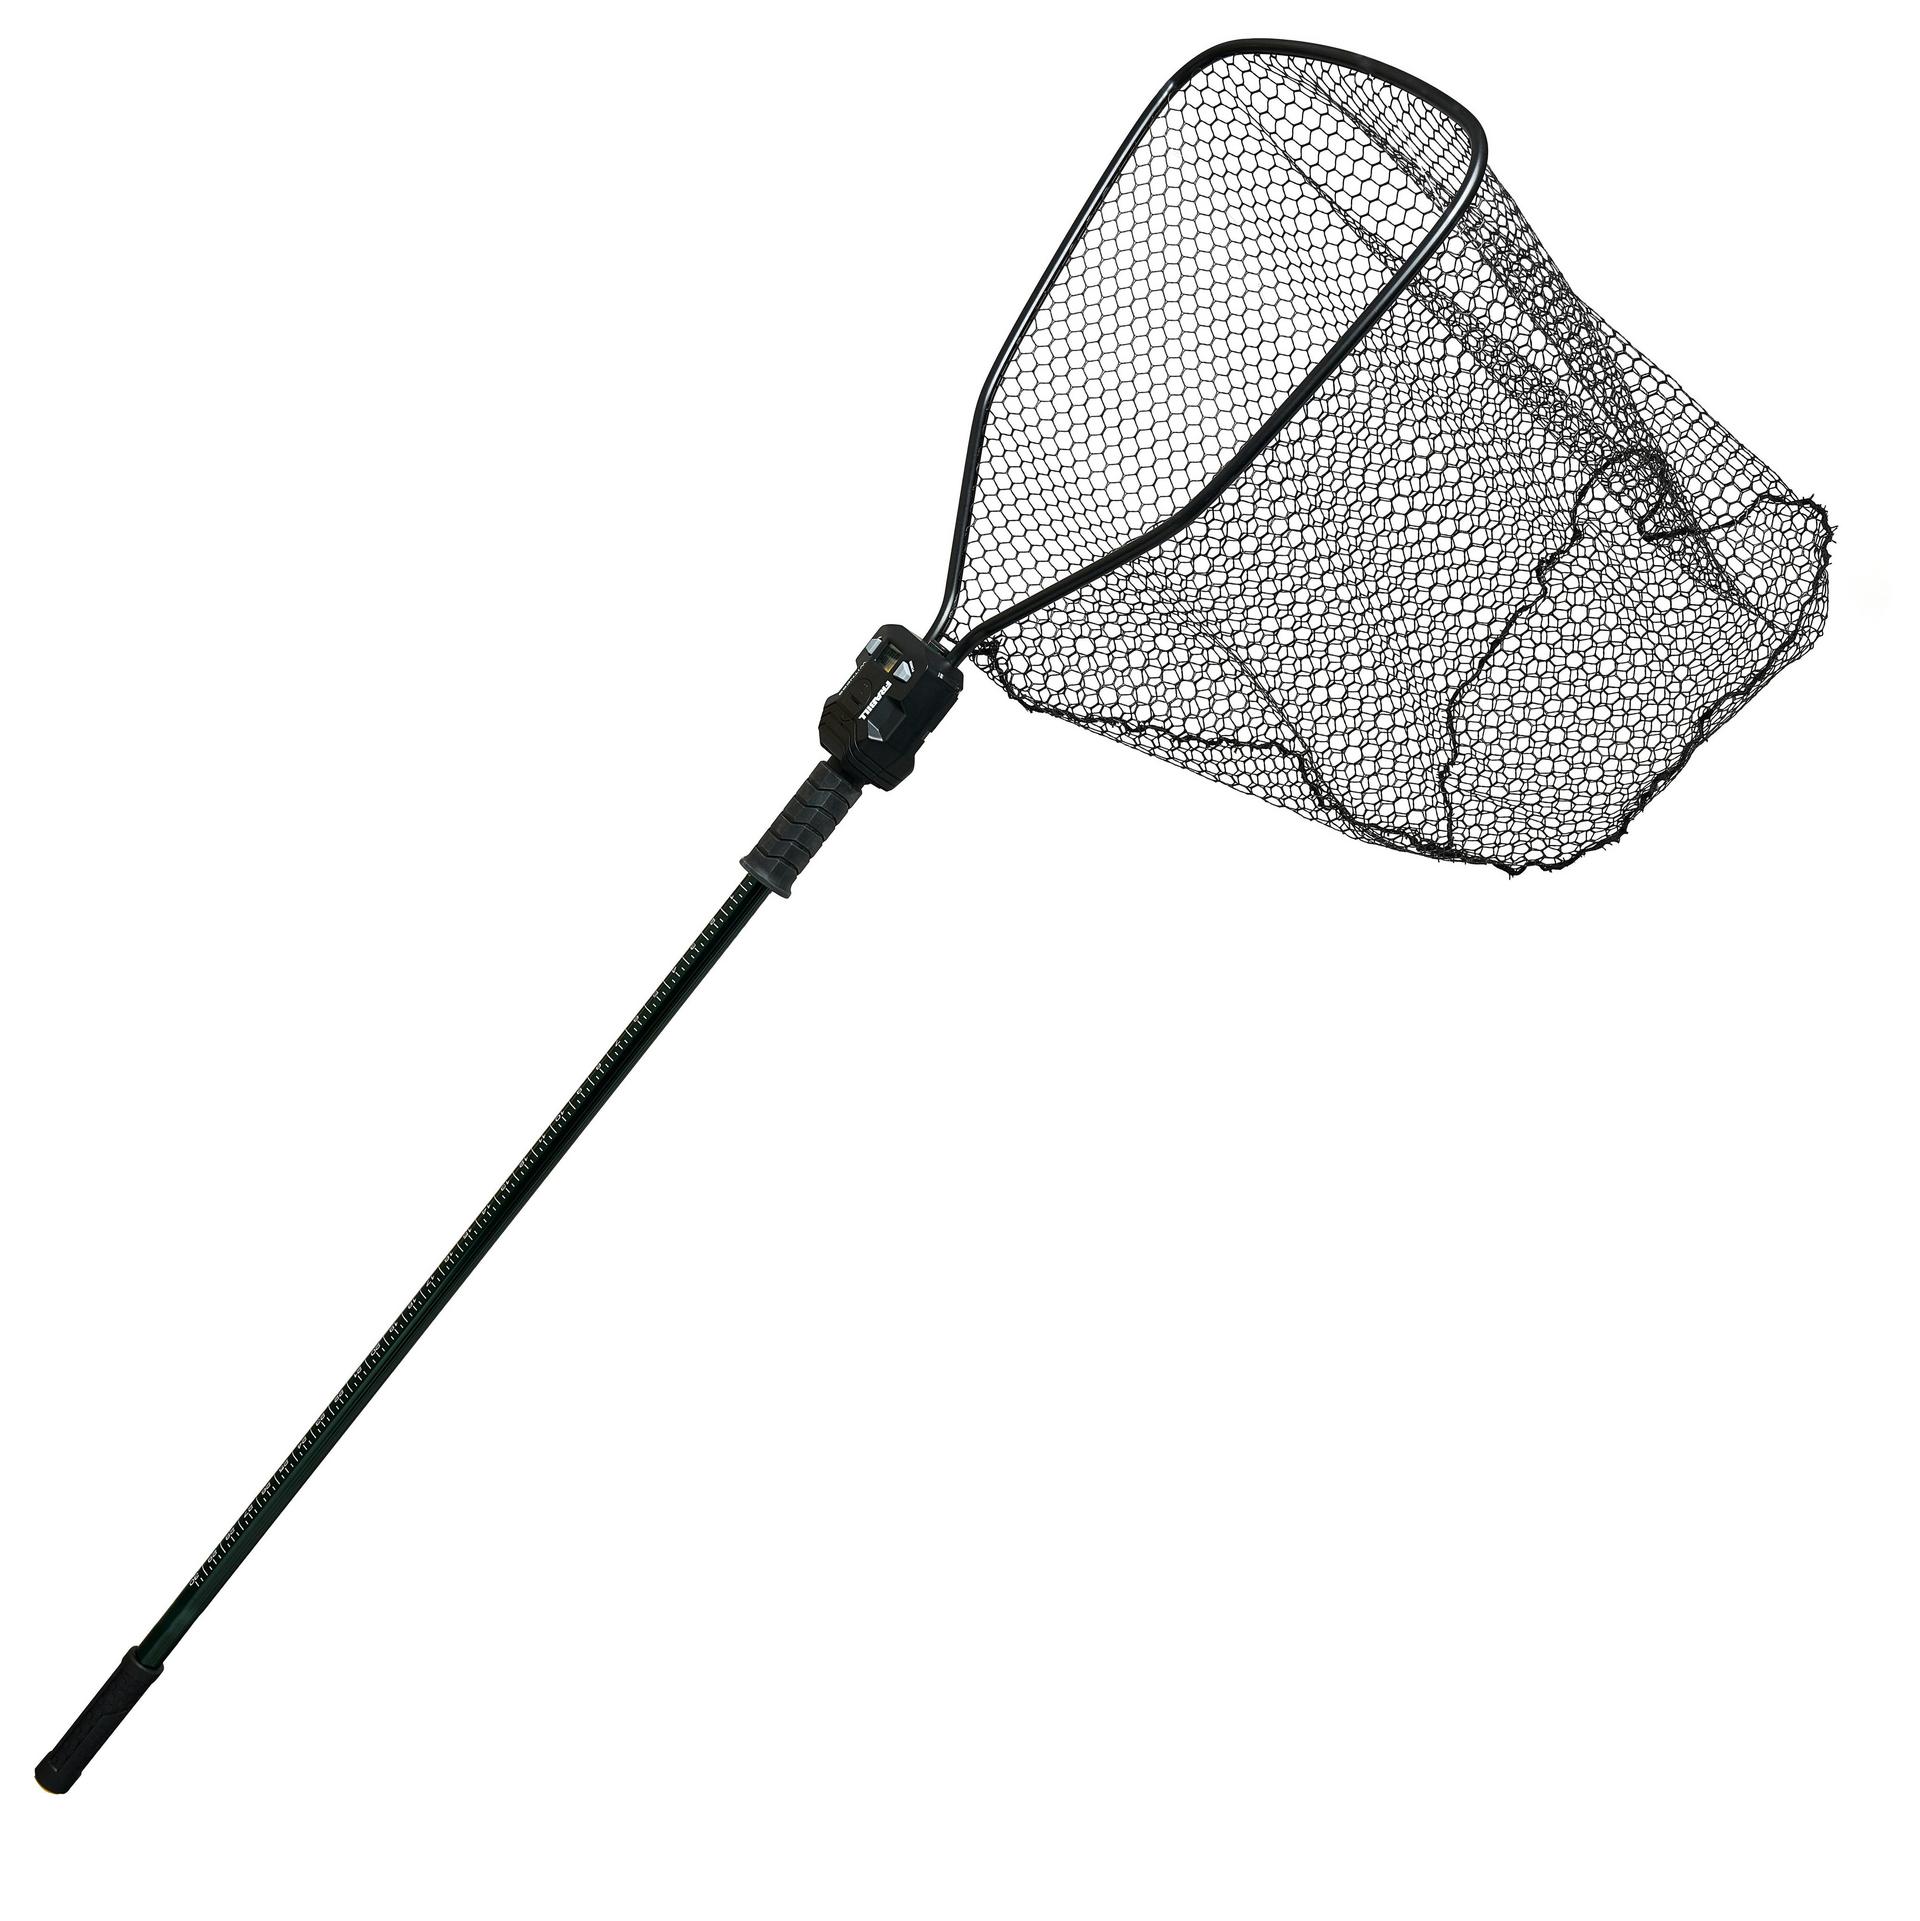 Lixada Fly Fishing Triangle Brail Landing Net Portable Foldable Lightweight Net Nylon Fishing Net Aluminum Alloy Frame, Size: 27703